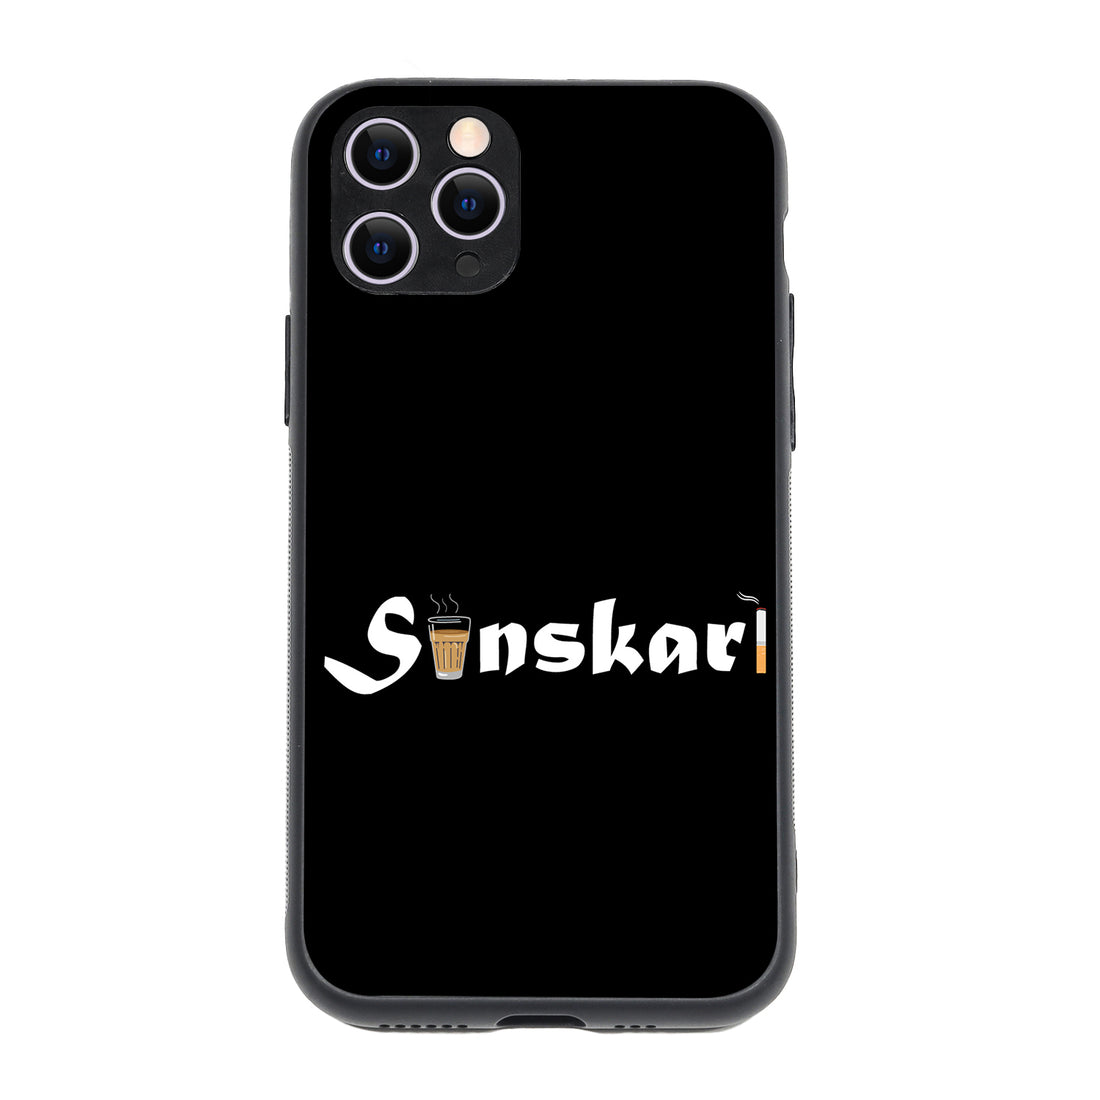 Sanskari Uniword iPhone 11 Pro Case